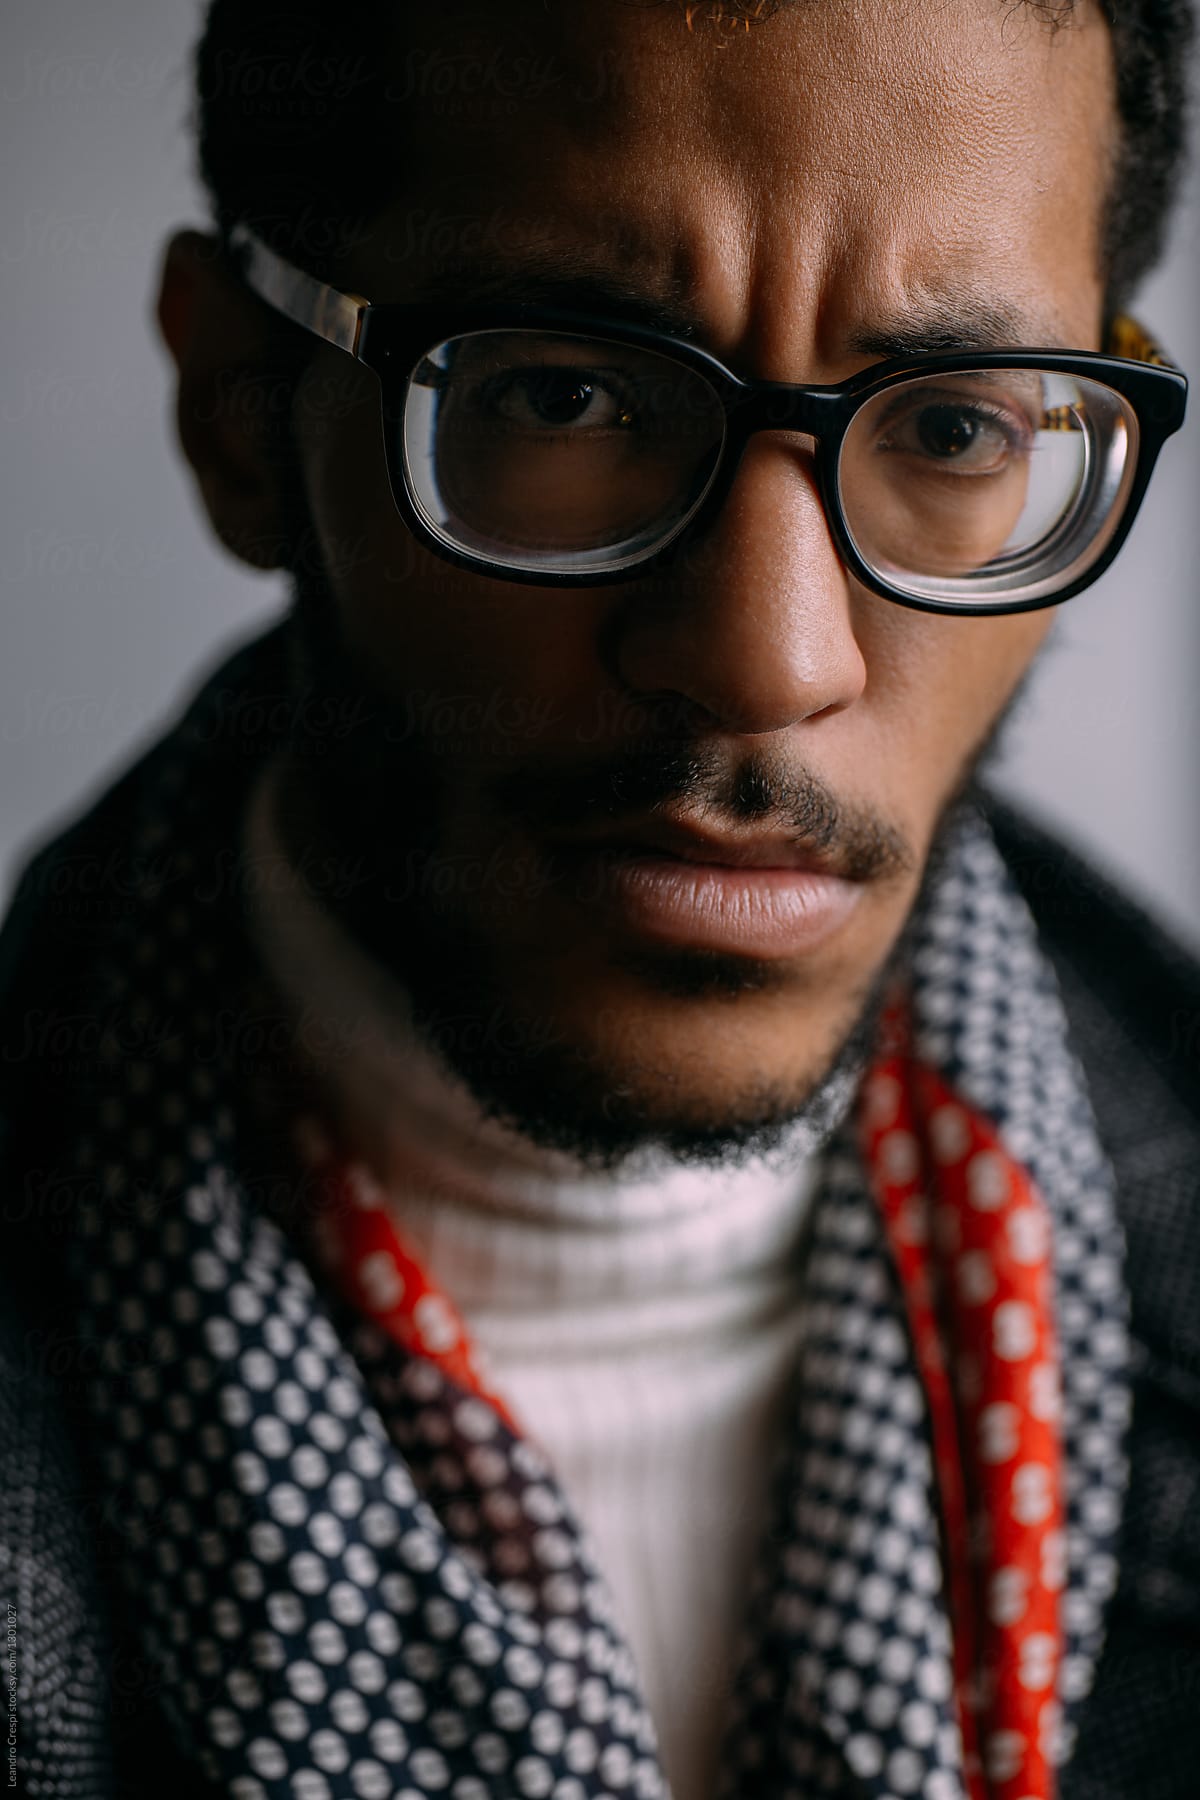 Closeup portrait of a man with glasses